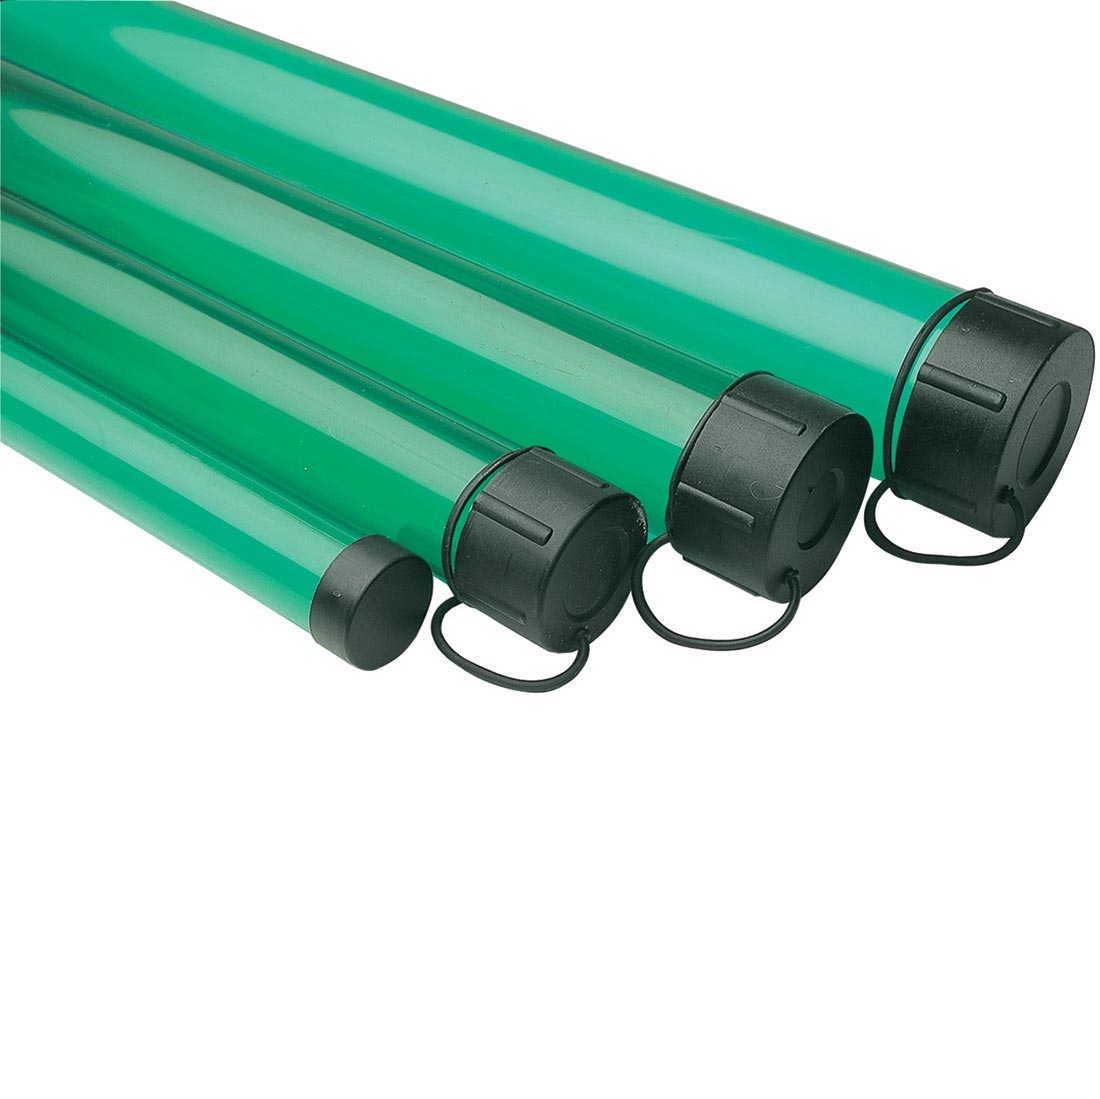 Leeda Green Plastic Rod Tube - Fishing Luggage